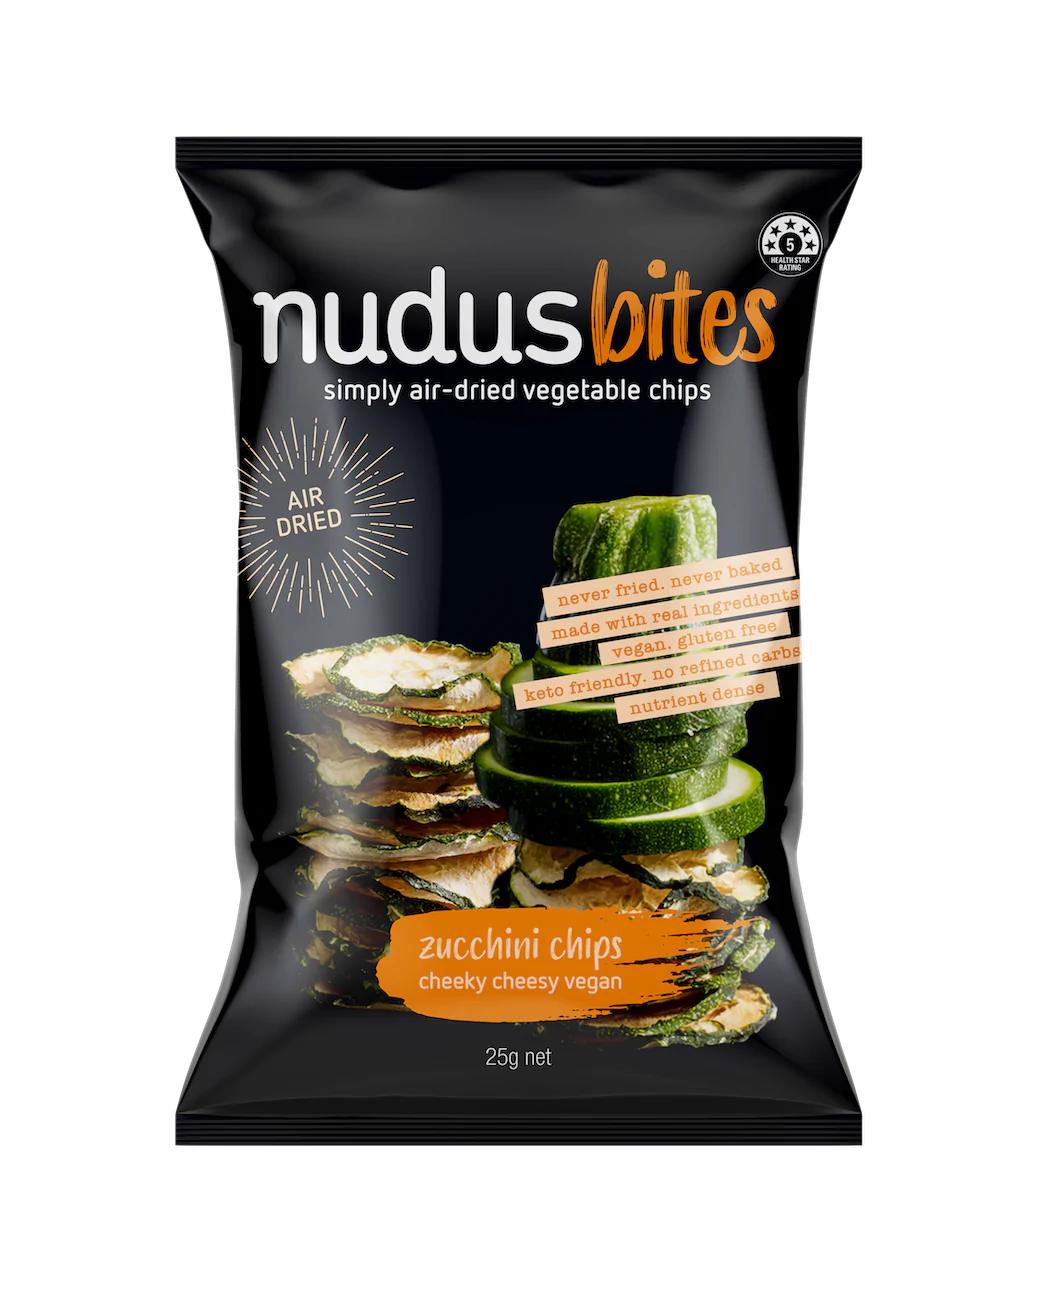 Nudus Bites Vegetable Air Dried Zucchini Chips 20g, Cheeky Cheesy Vegan Flavour